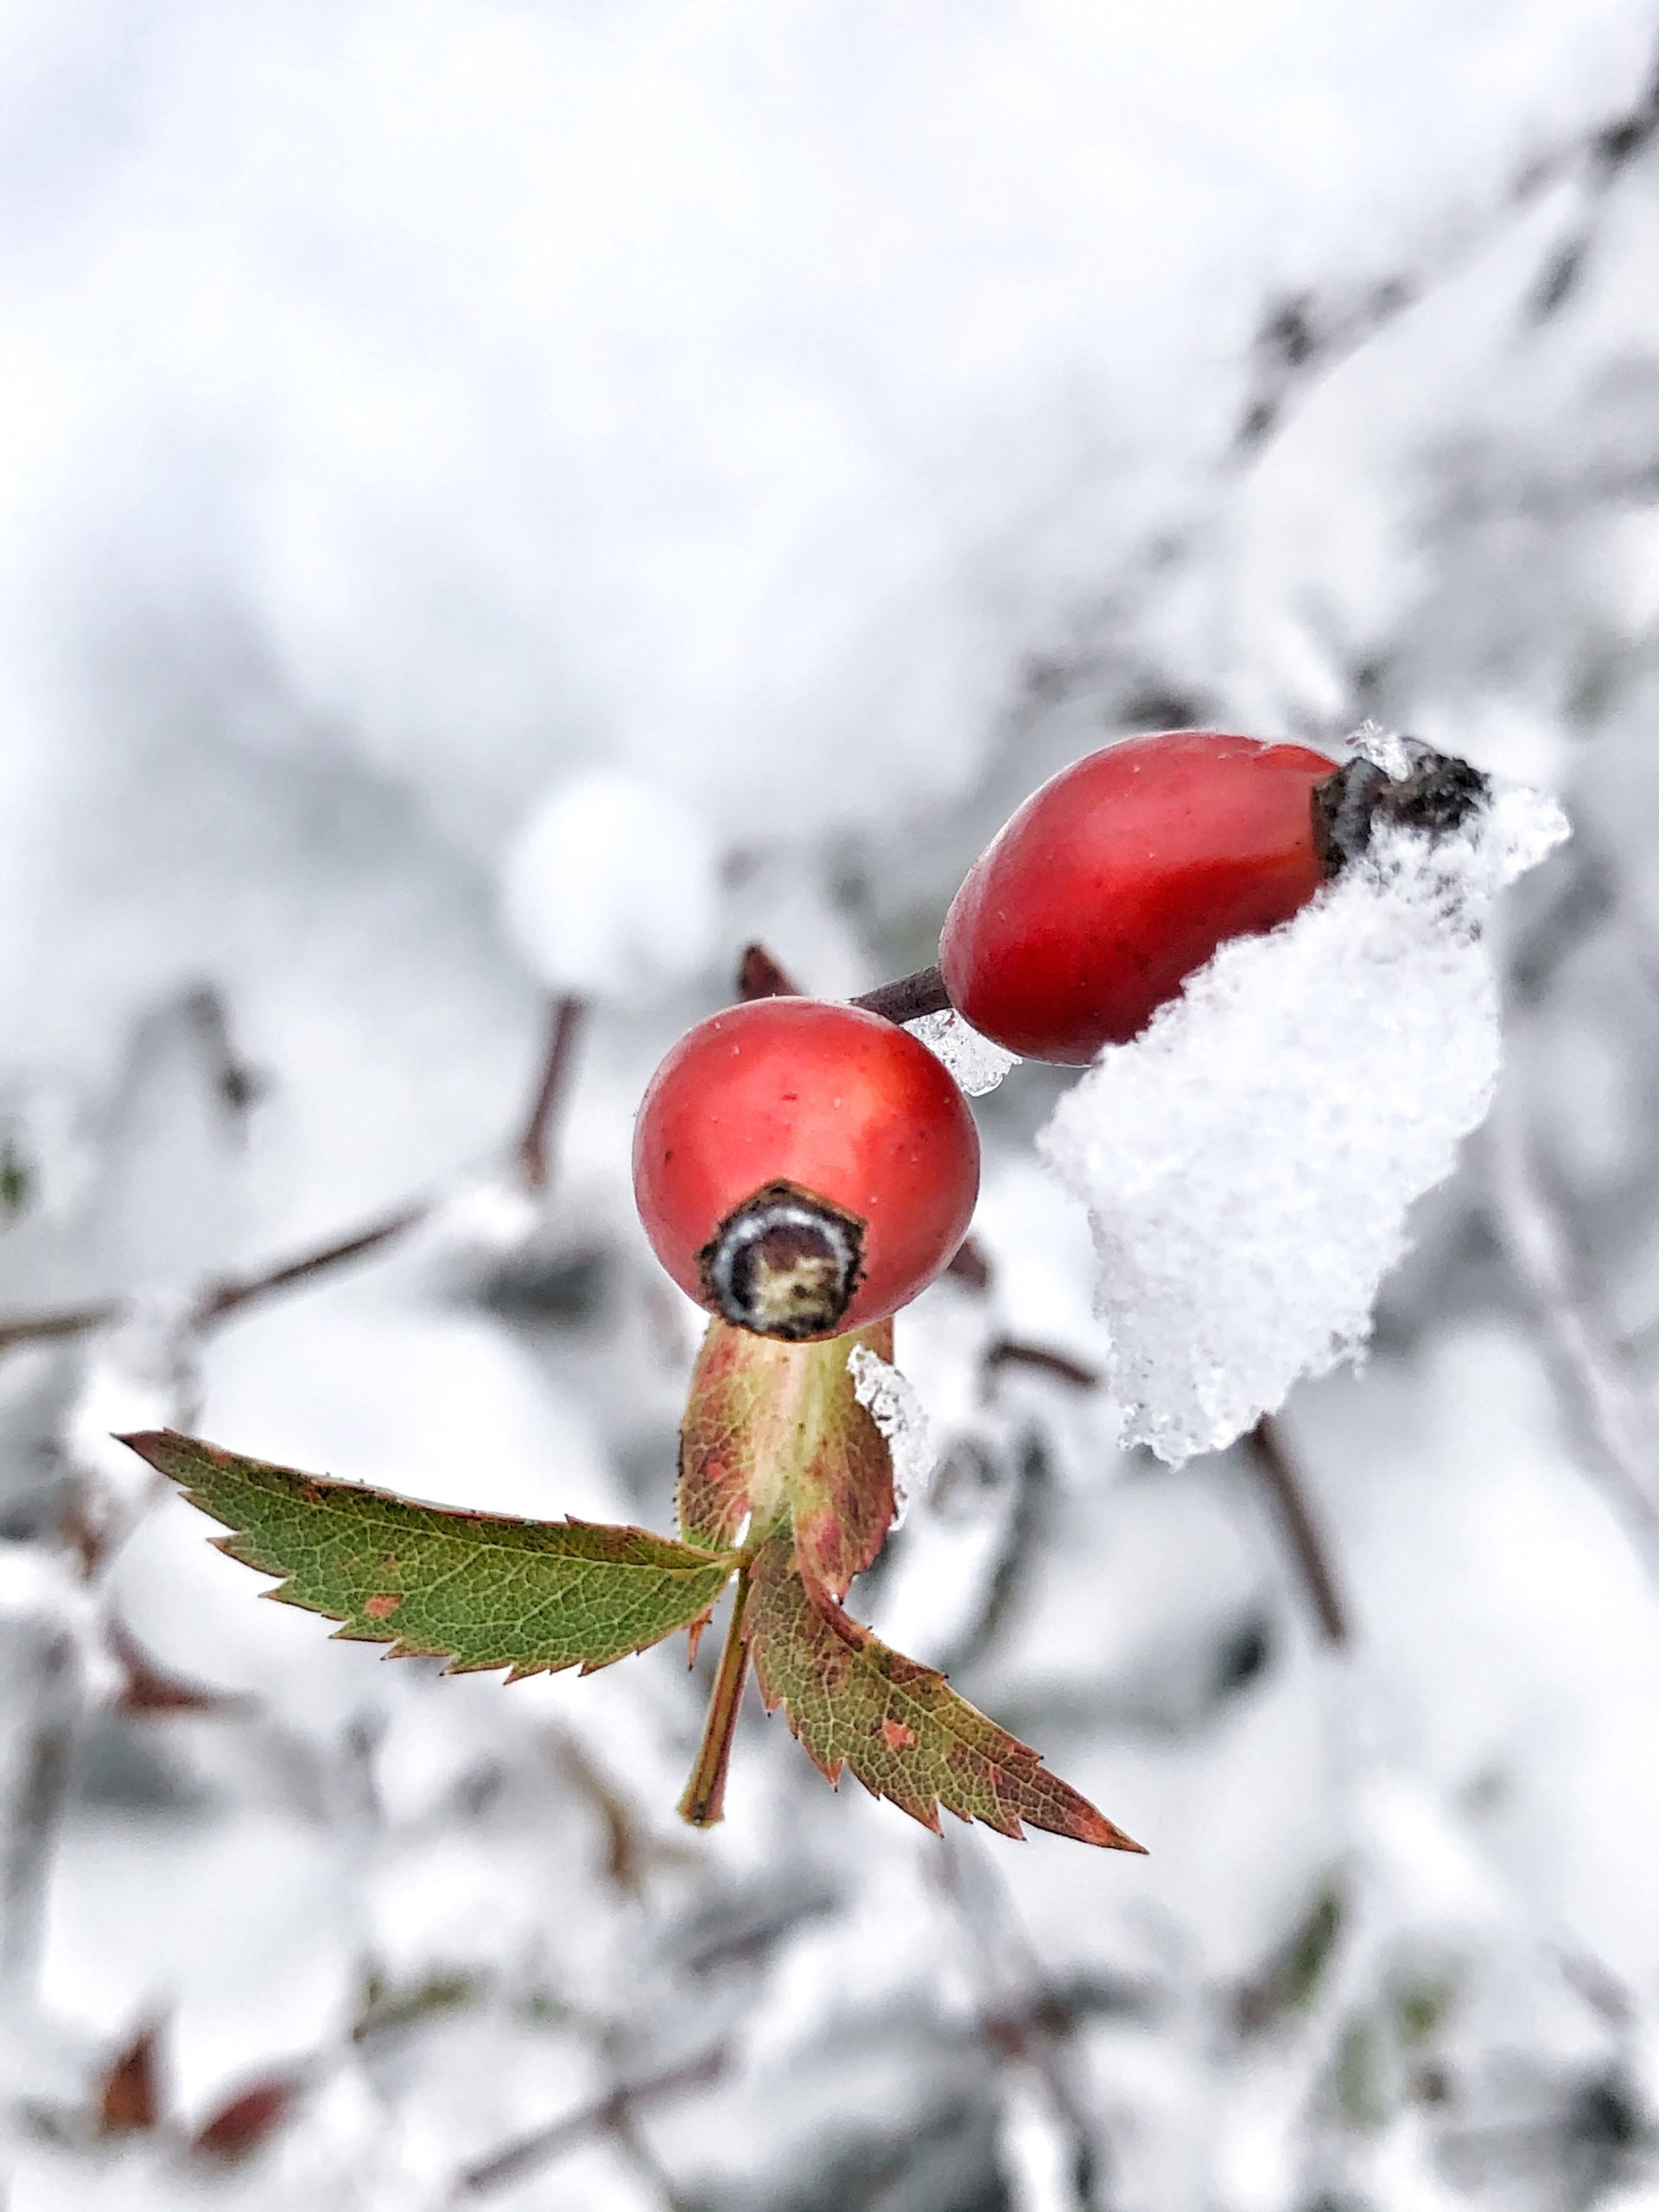 Fruit in snow